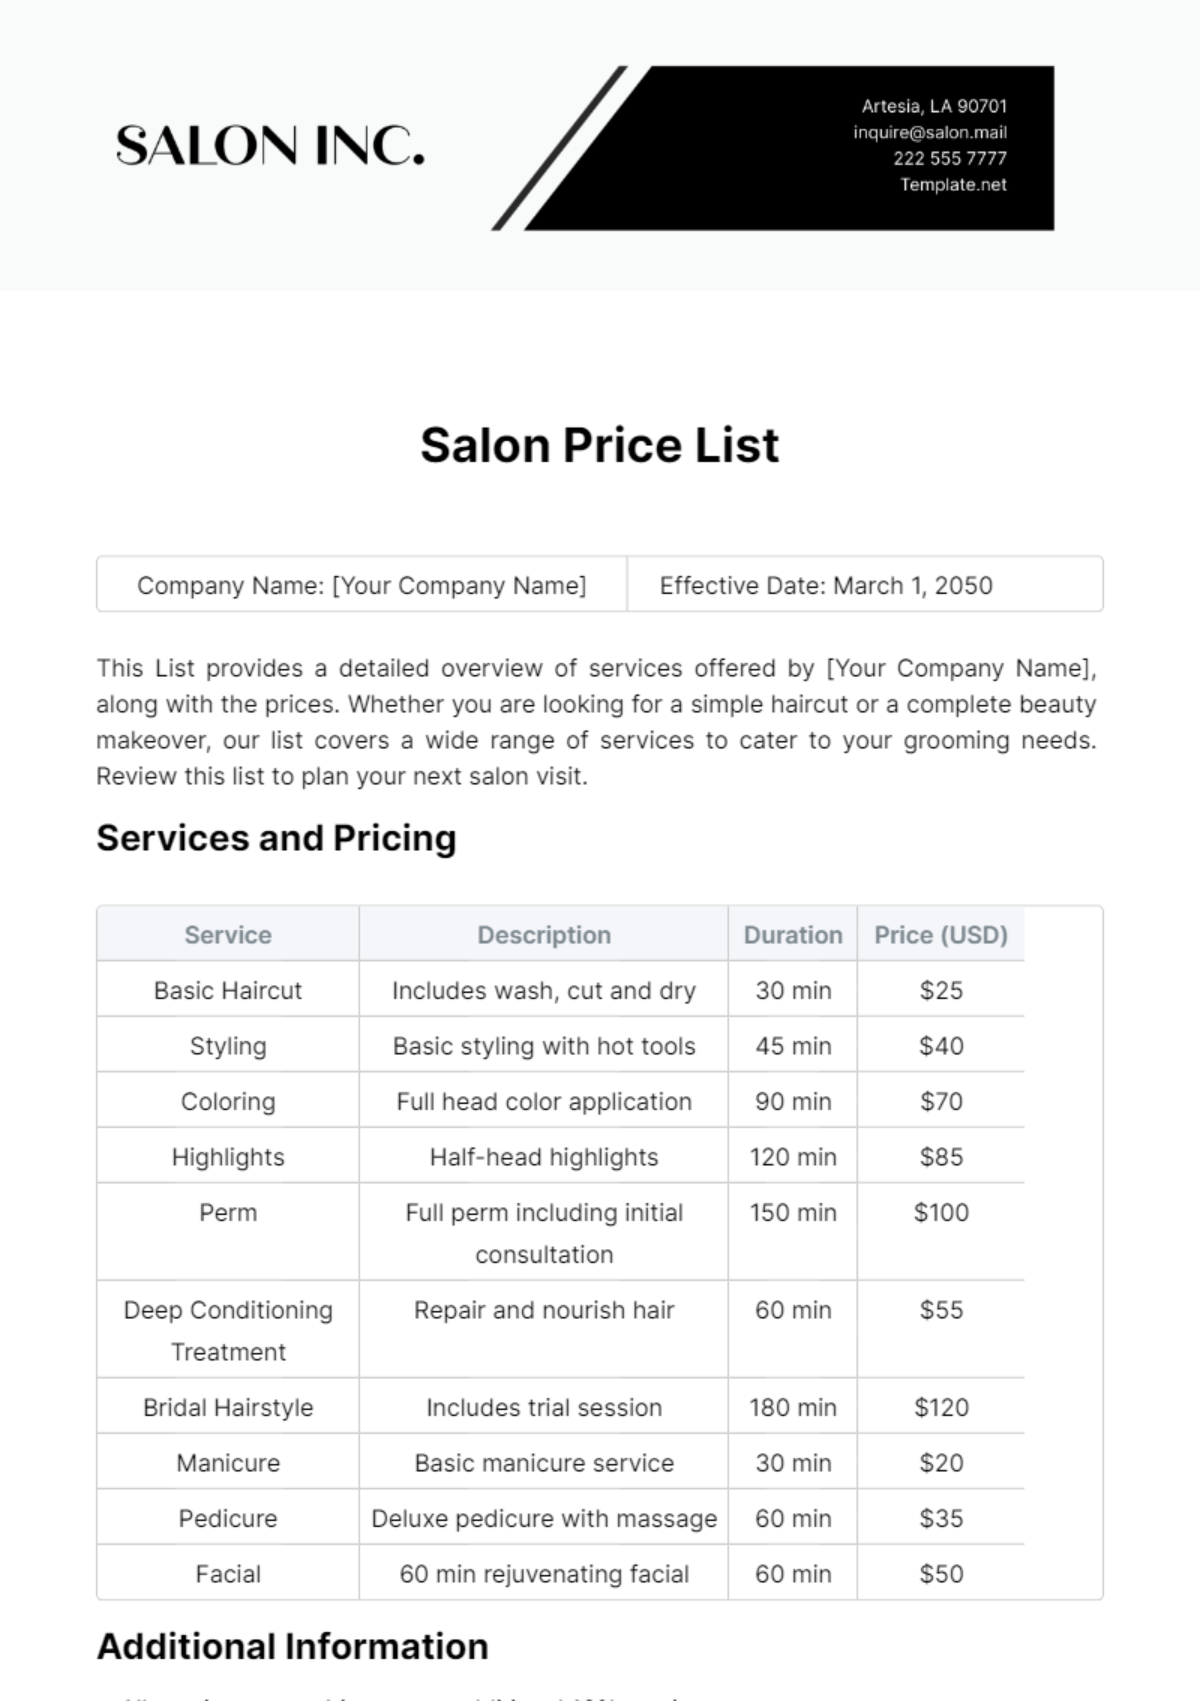 Salon Price List Template